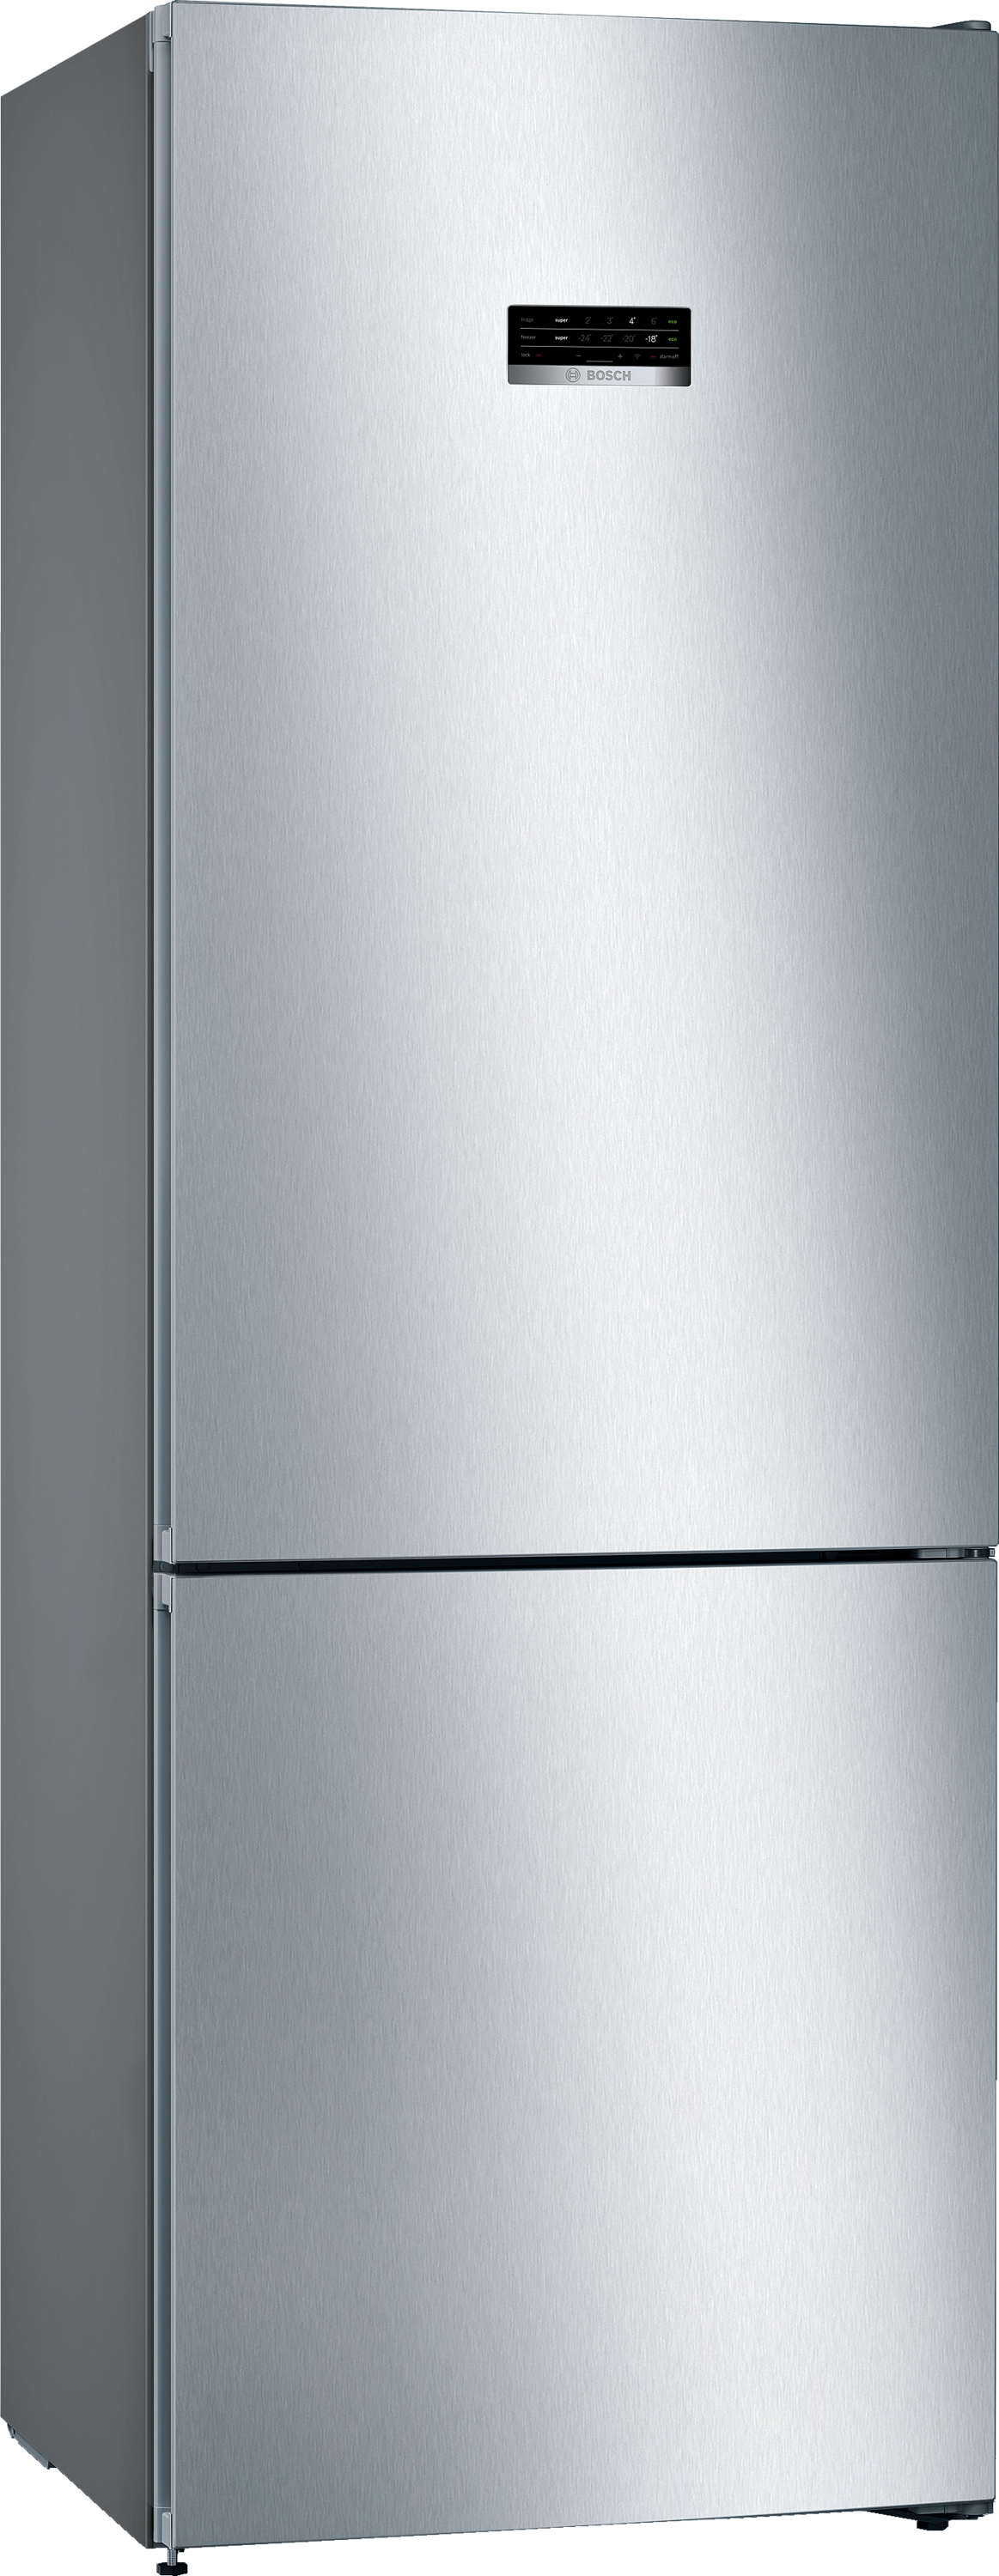 KGN49XIEA, Samostojeći frižider sa zamrzivačem dole